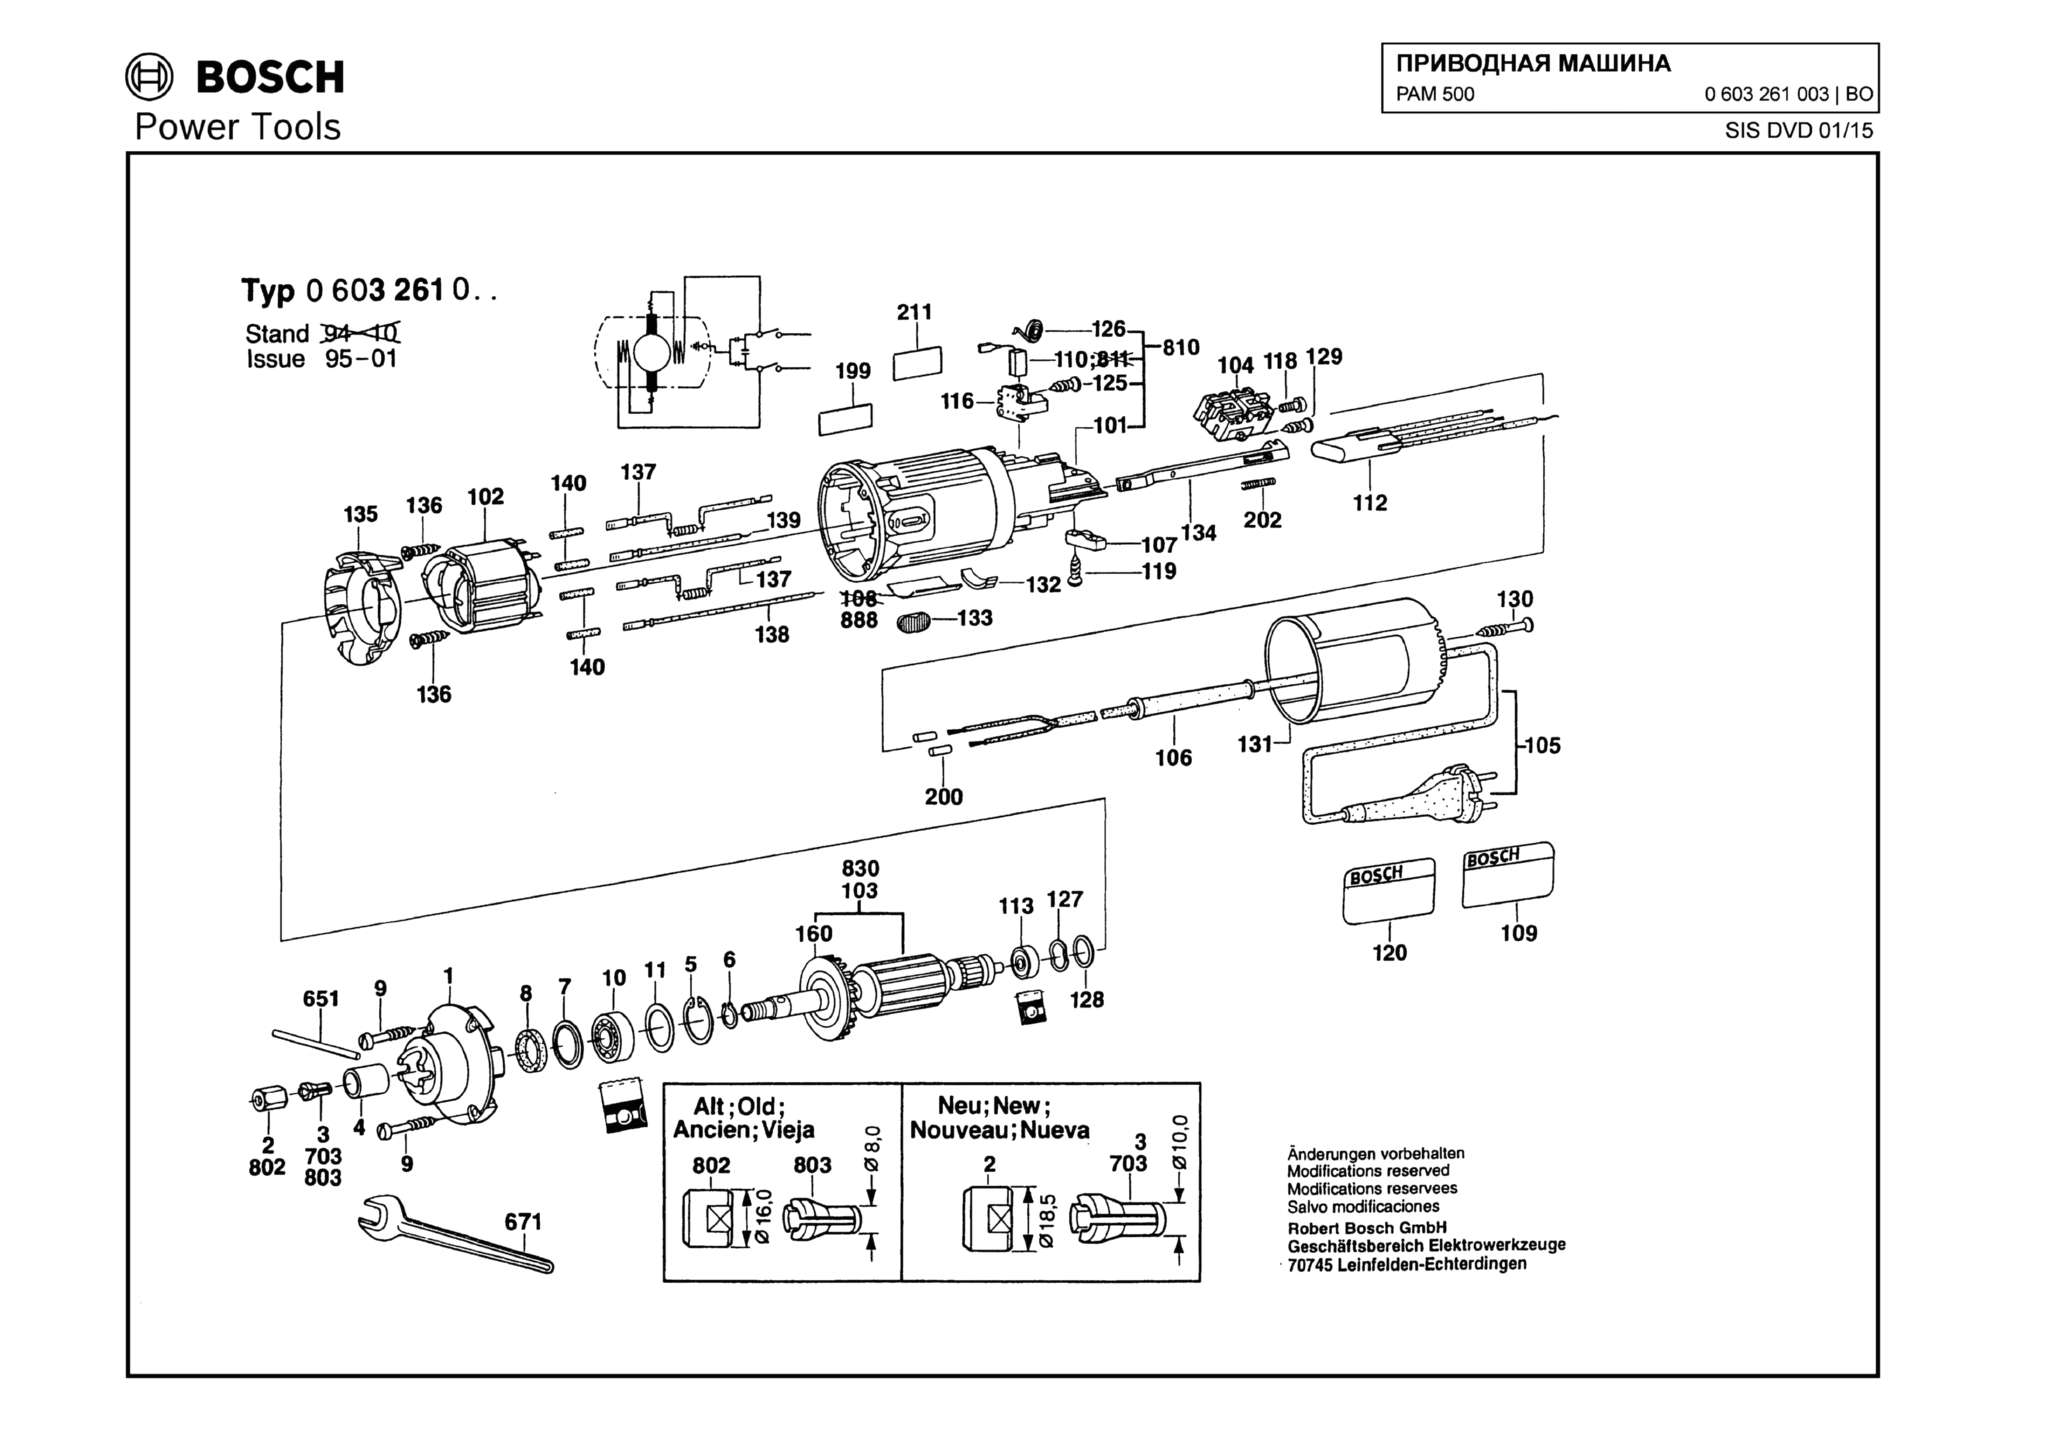 Запчасти, схема и деталировка Bosch PAM 500 (ТИП 0603261003)